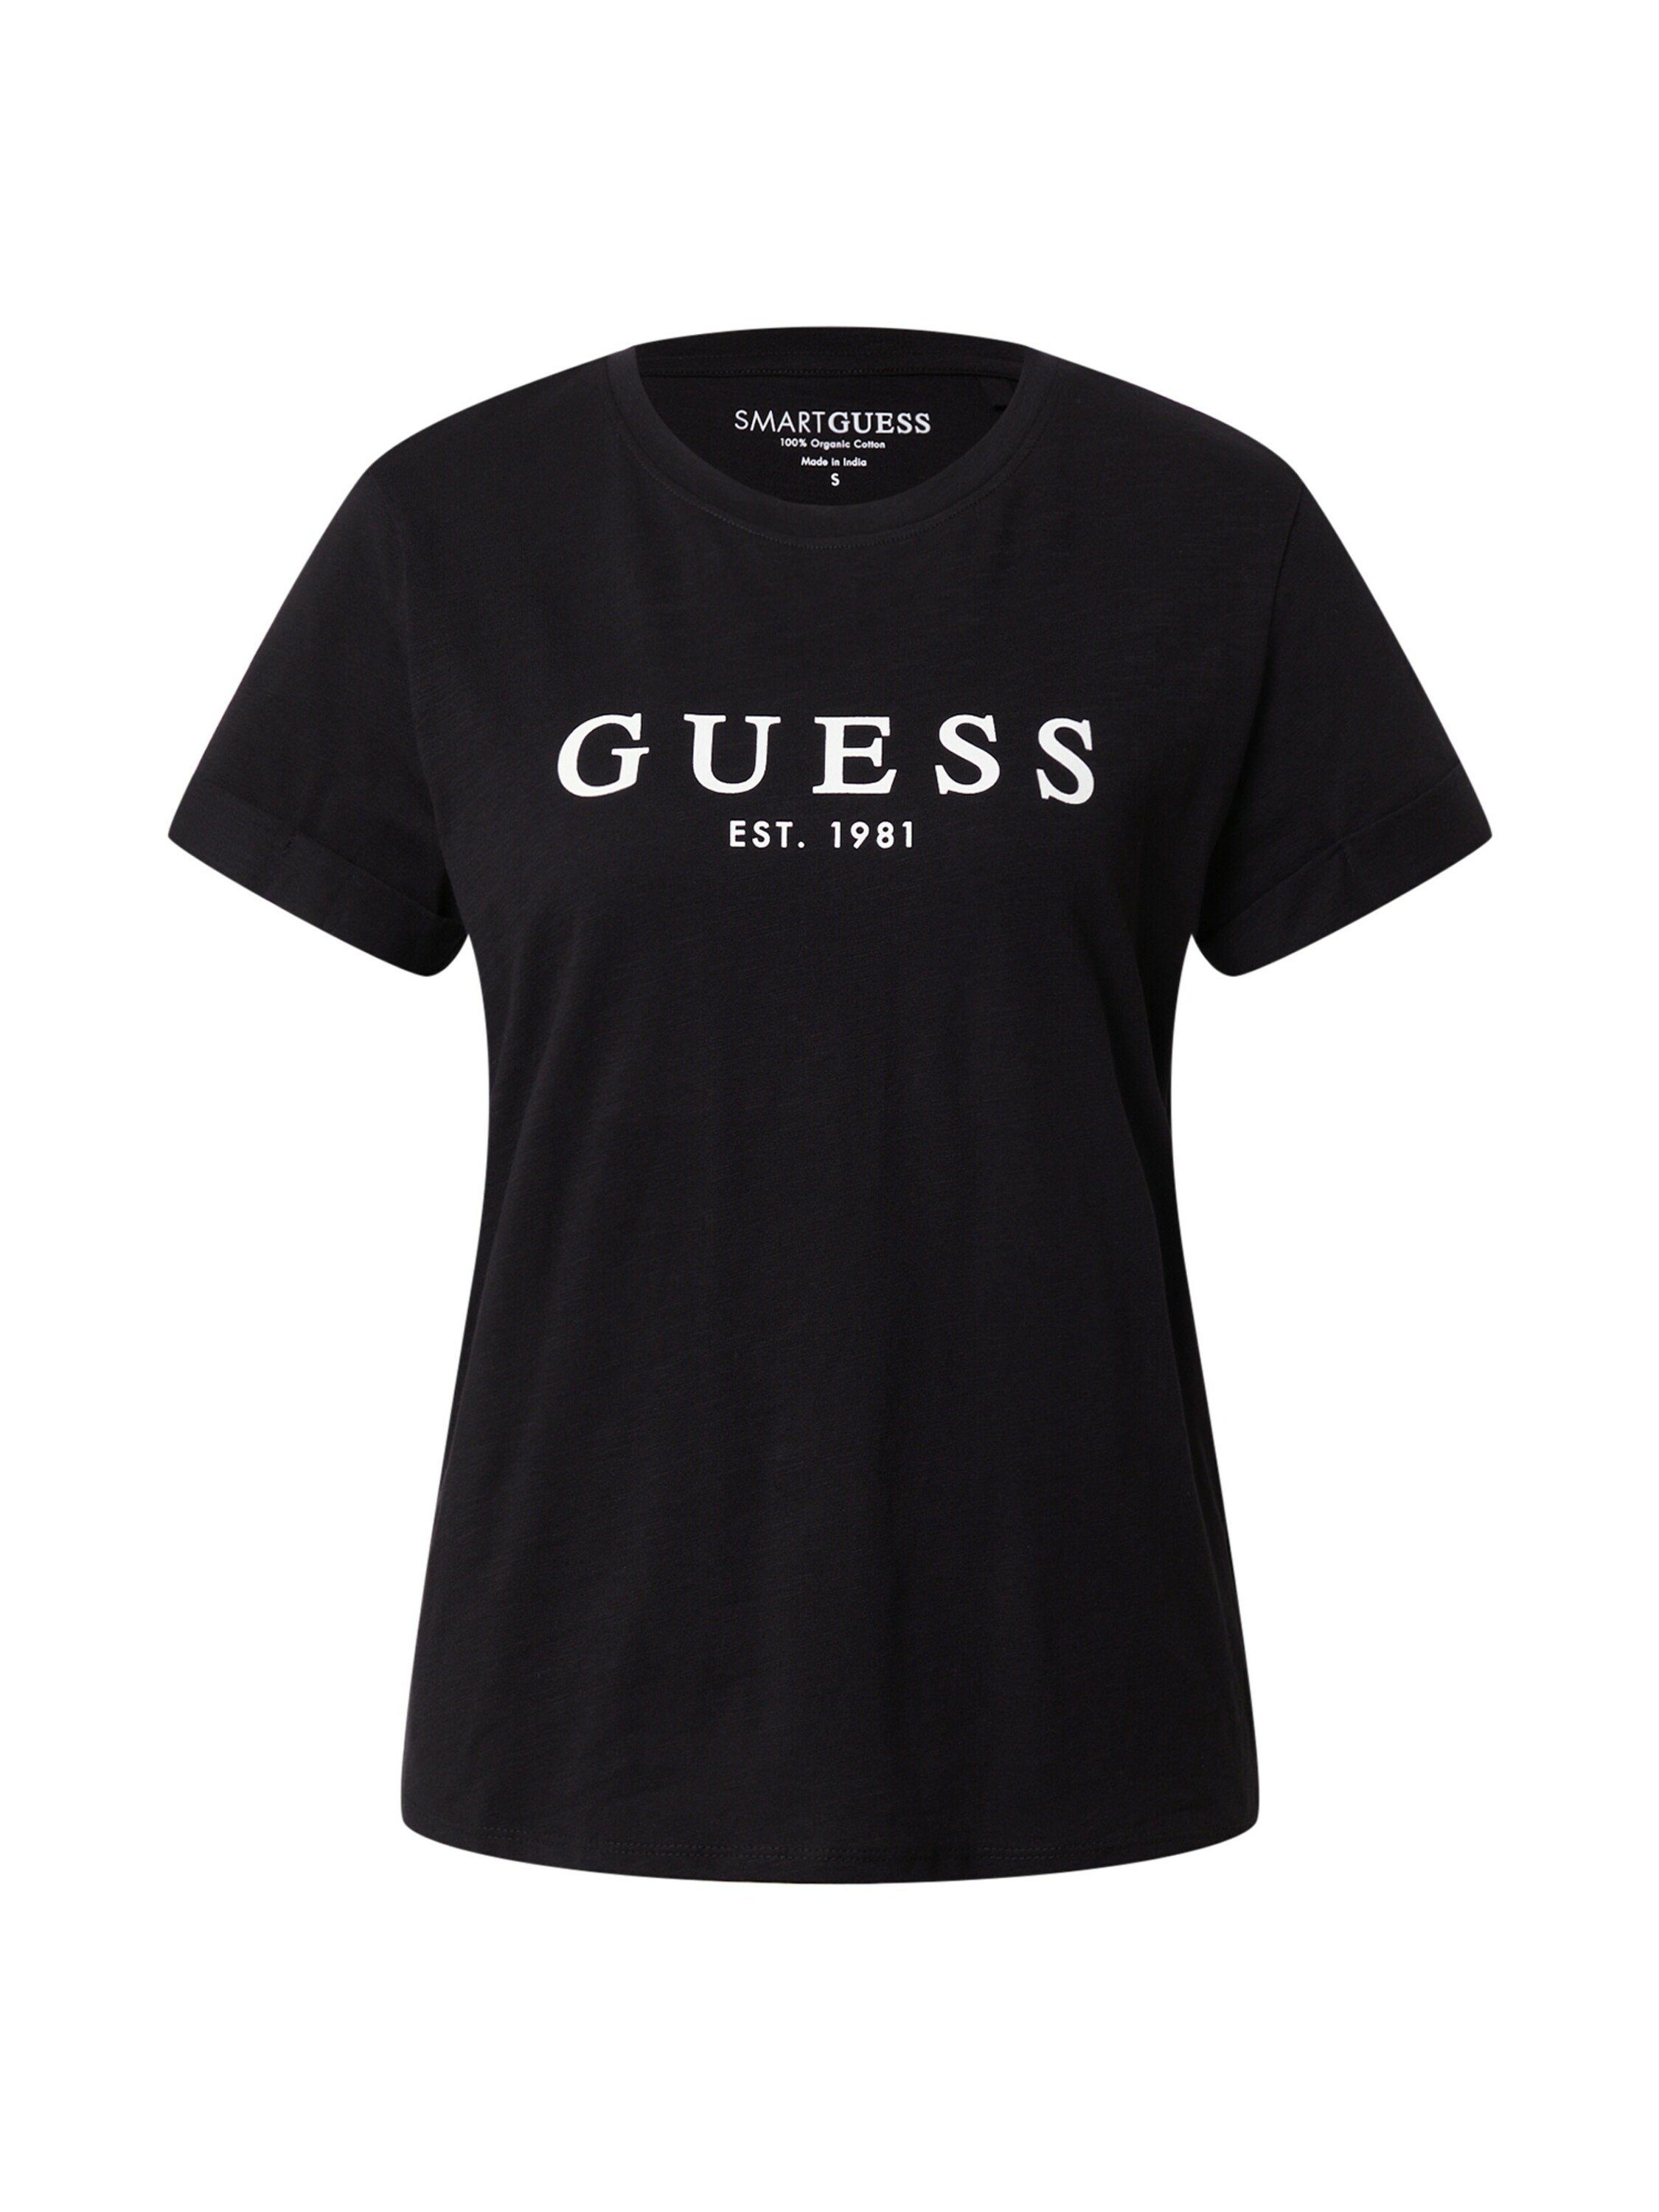 Guess Shirts online kaufen | OTTO